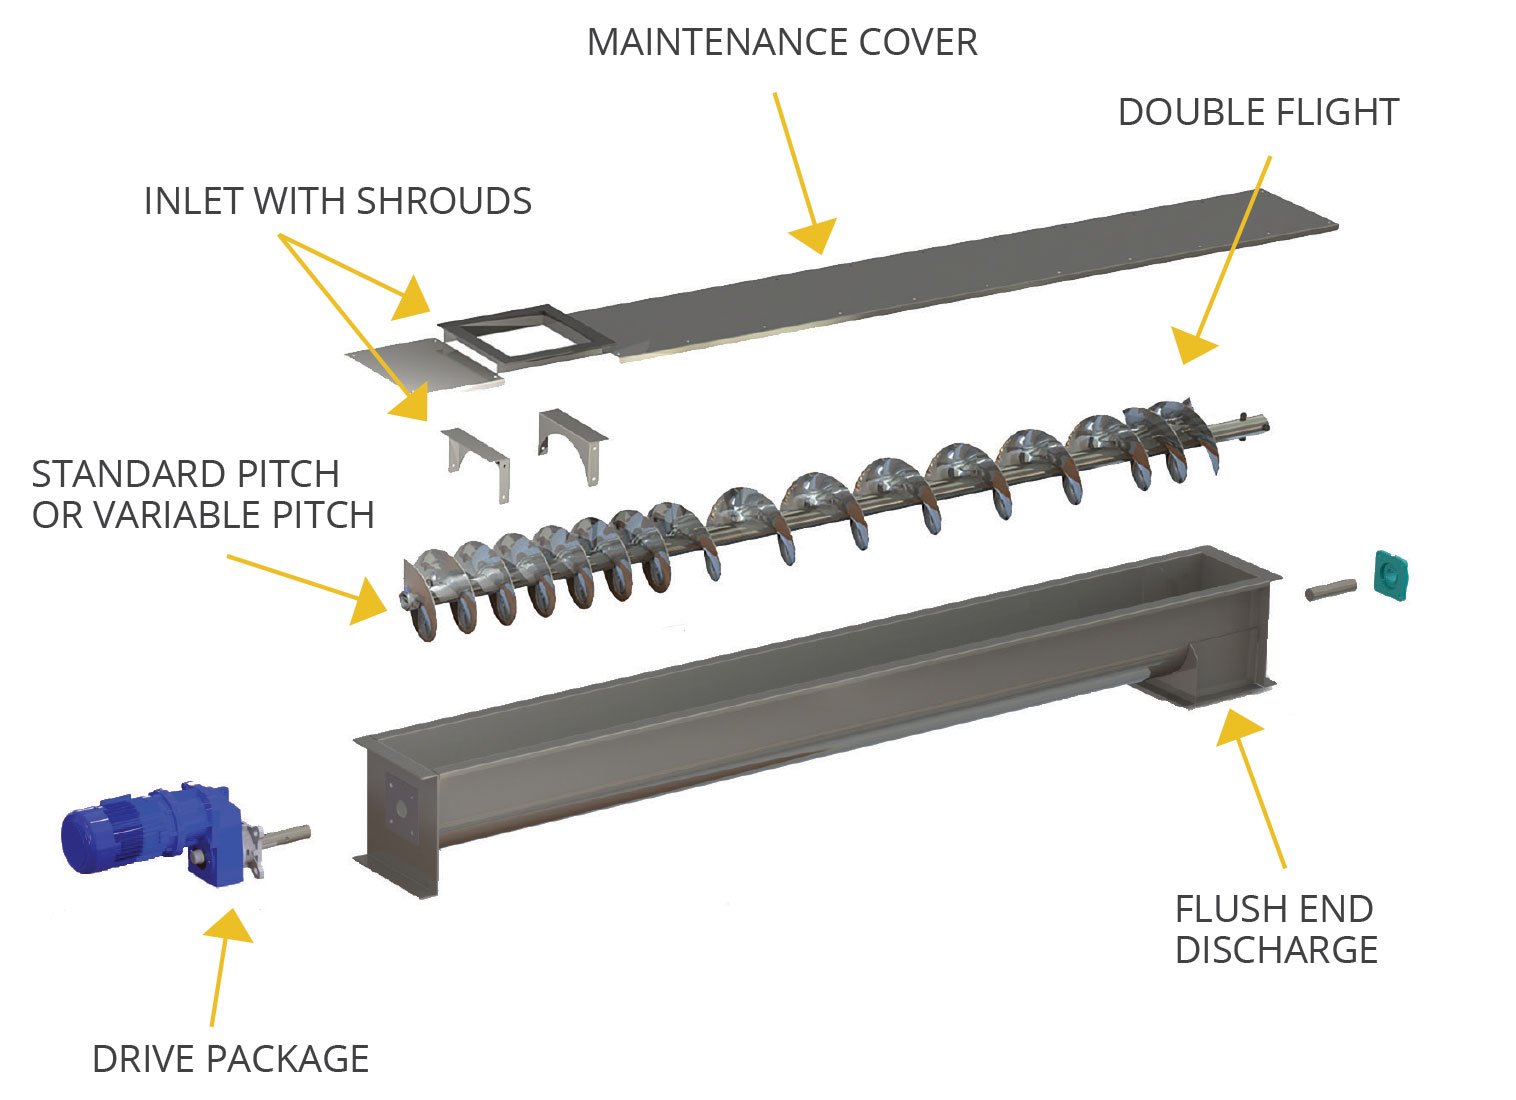 screw conveyor parts catalog